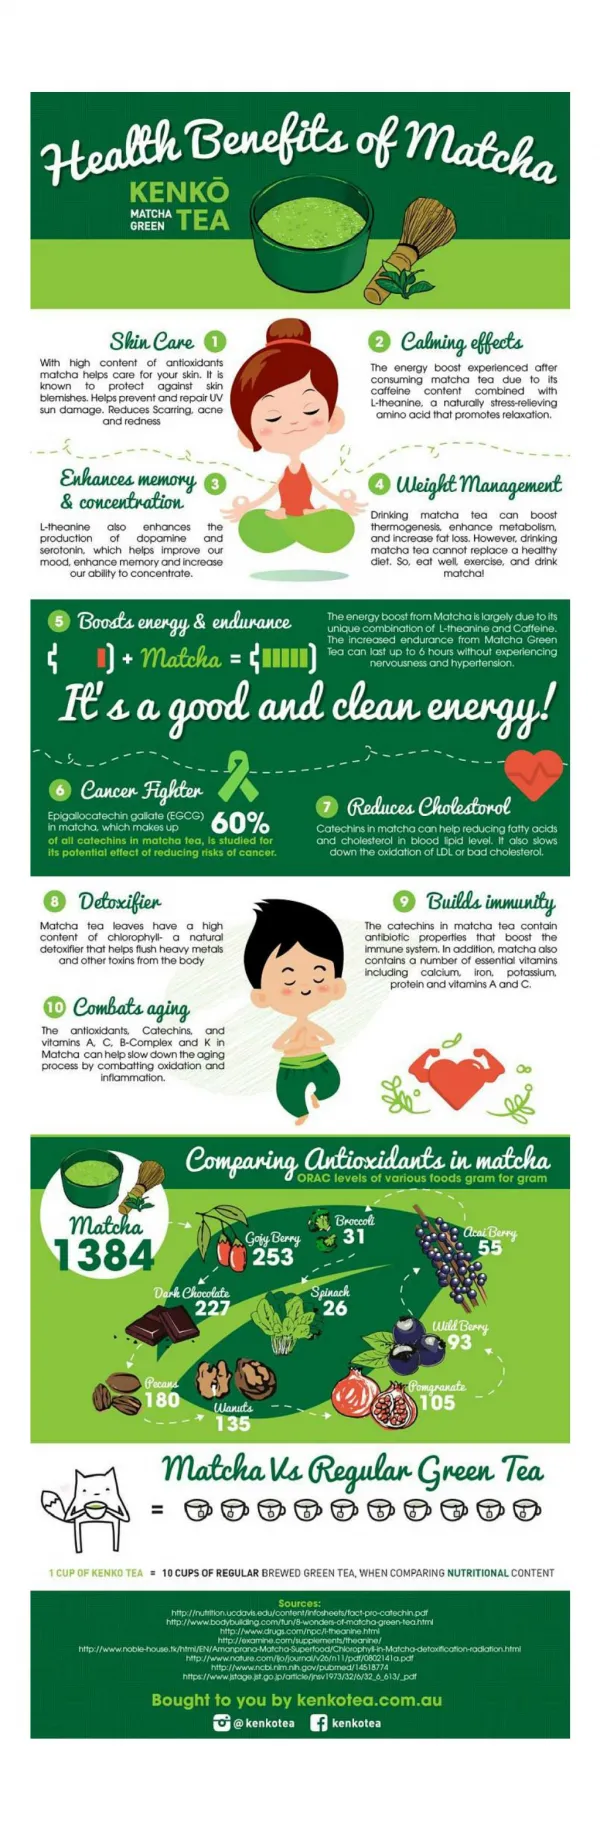 Matcha Green Tea Health benefits Infographic by kenkotea.com.au